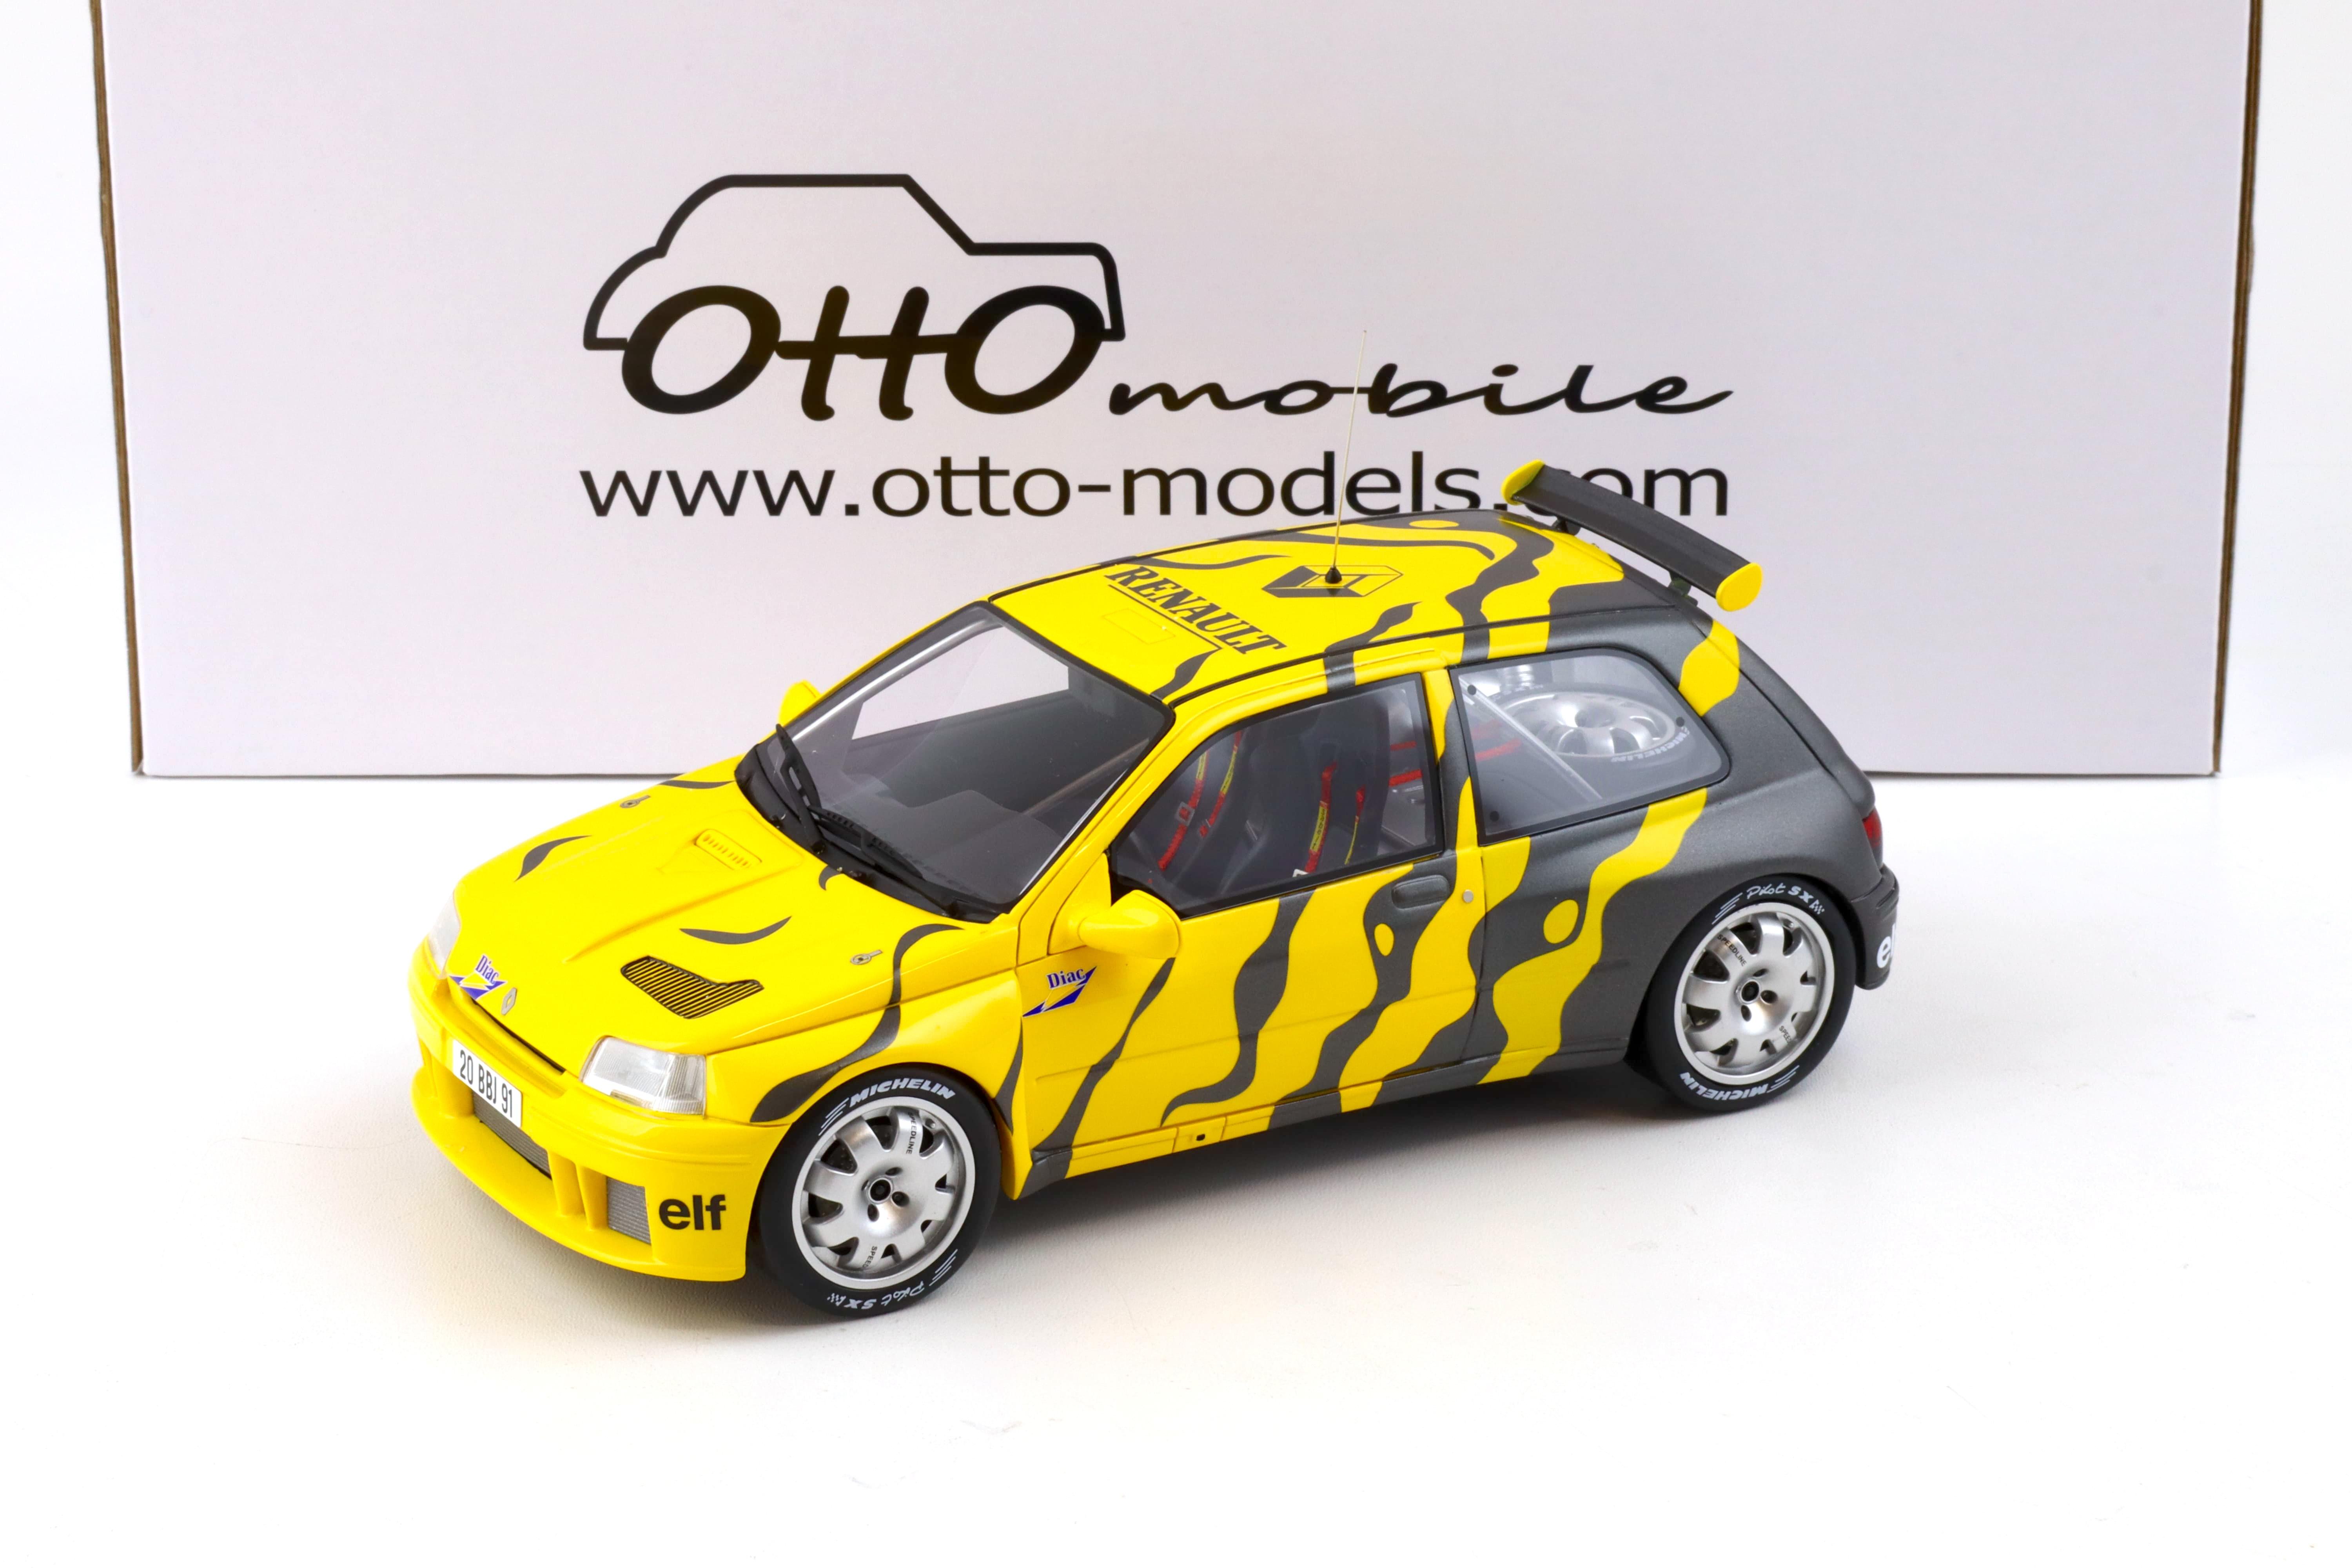 1:18 OTTO mobile OT822 Renault Clio Maxi Presentation 1995 black/ yellow